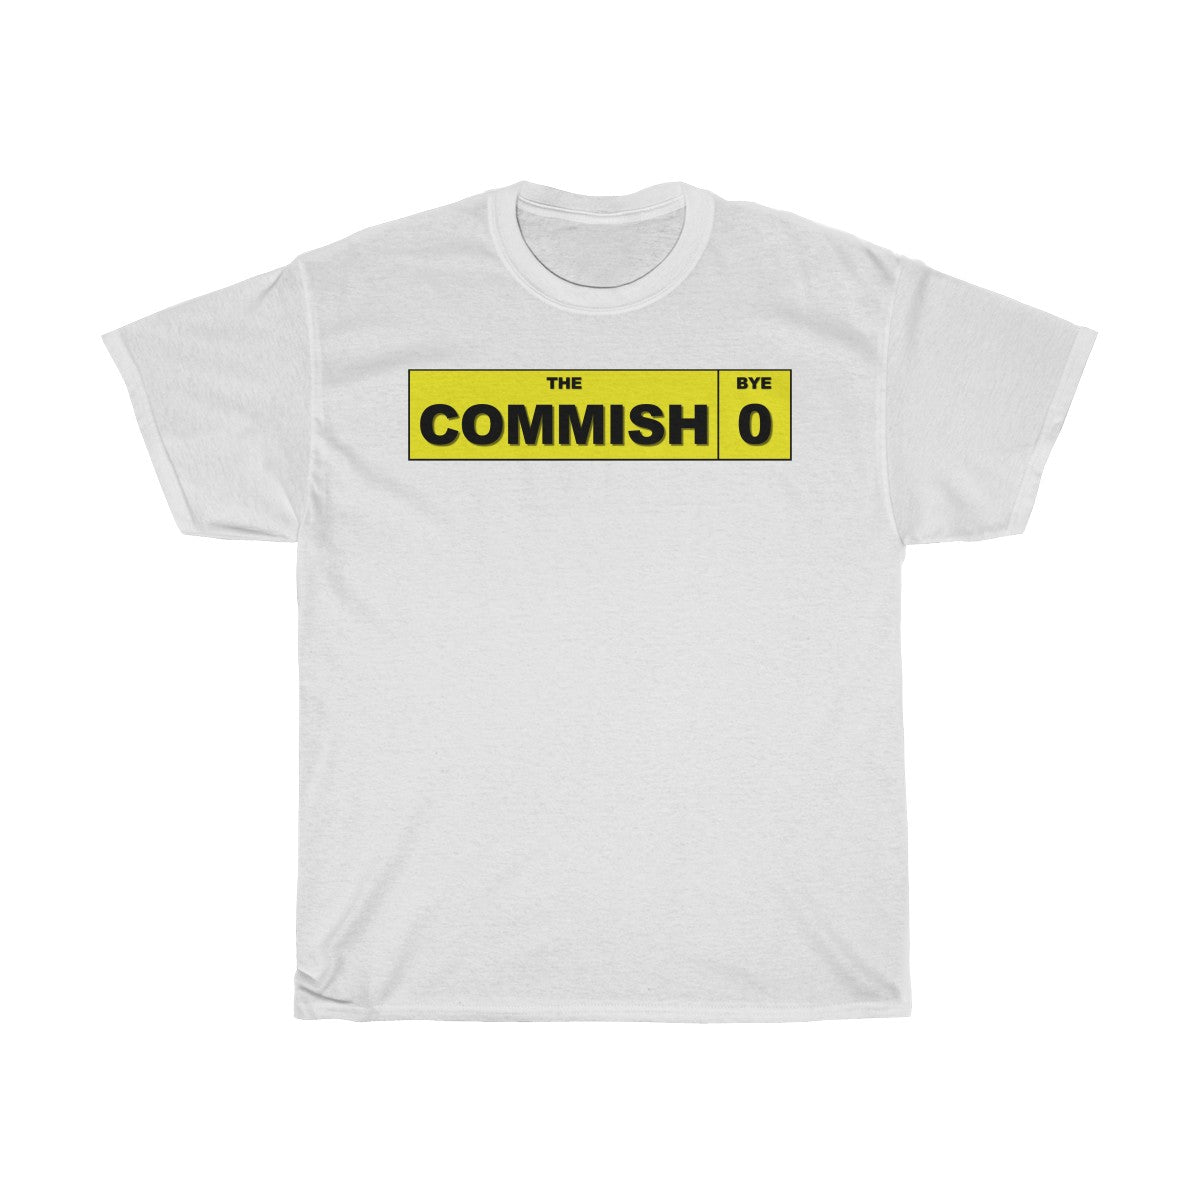 Commish Player Label T-Shirt - SaveTheDraft.com